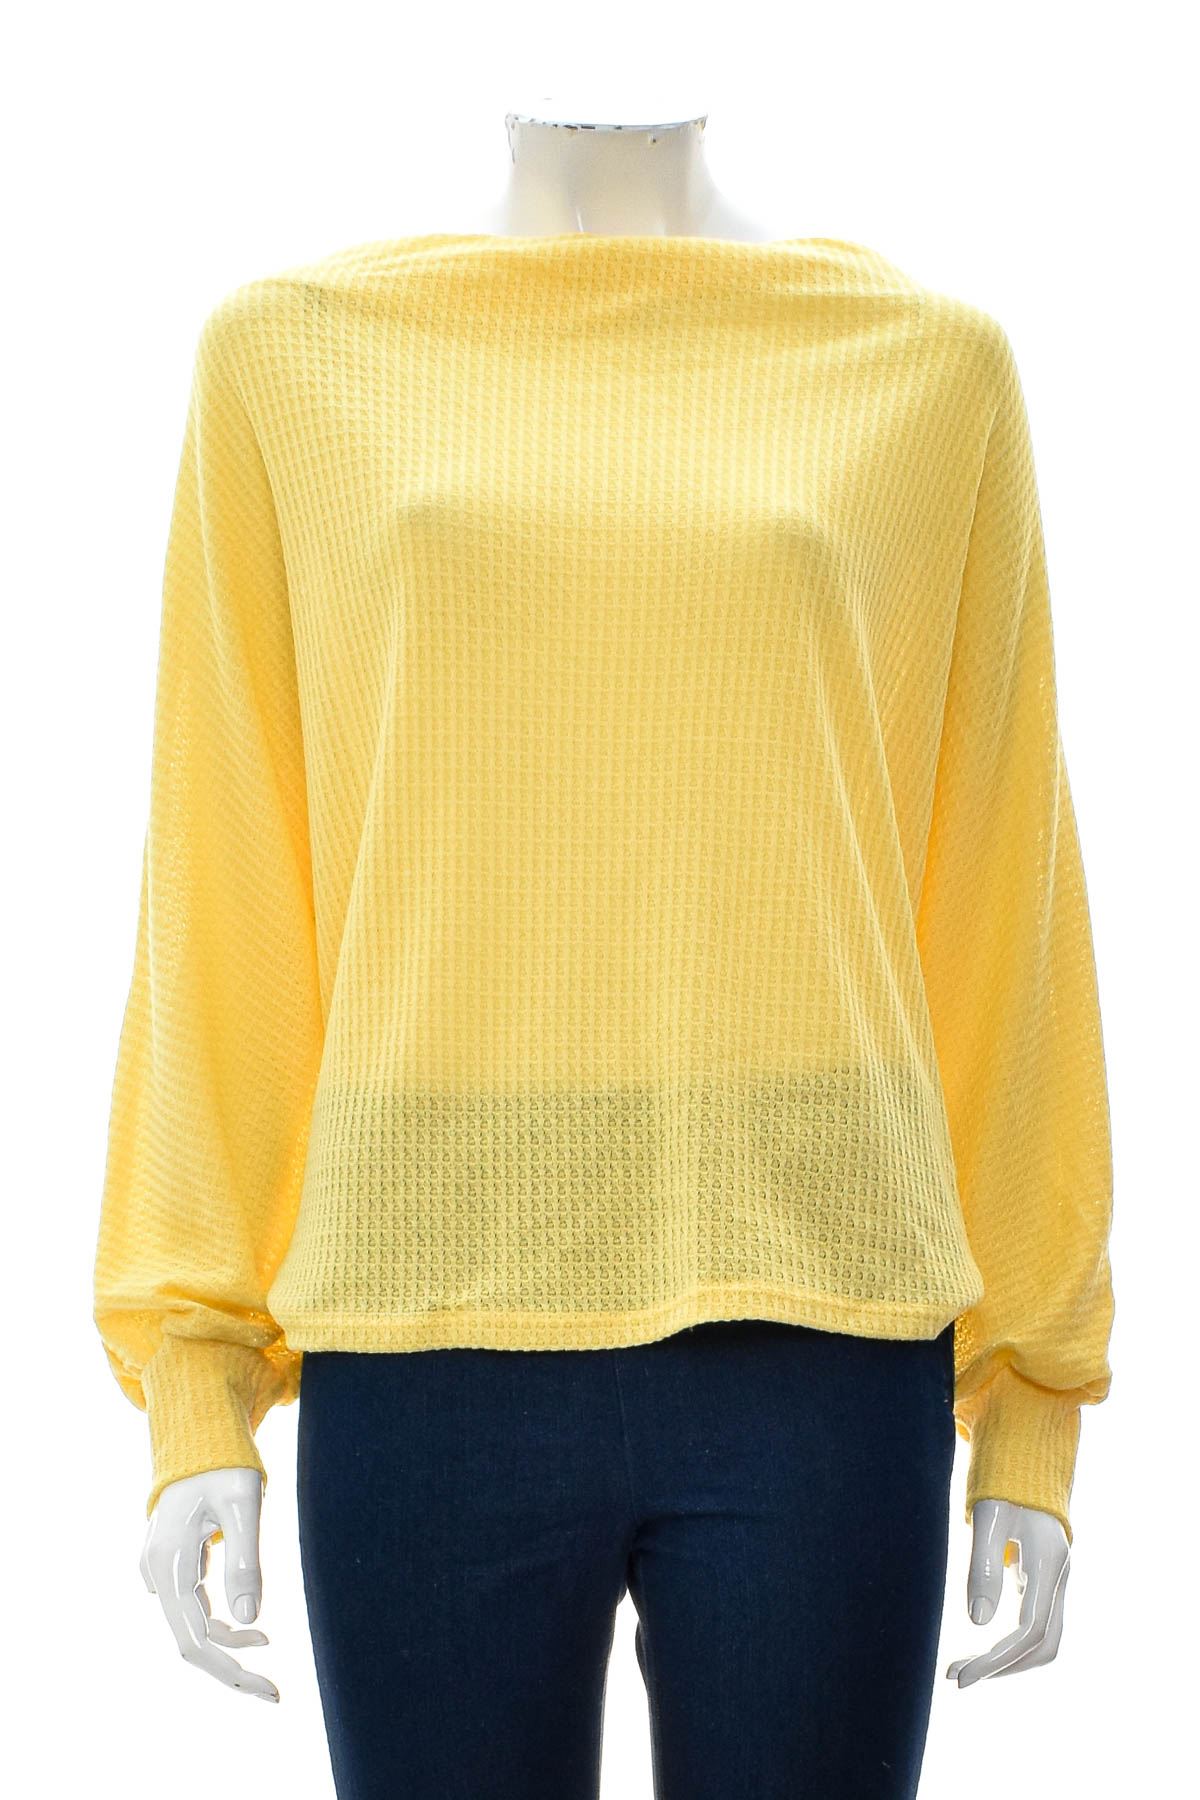 Women's sweater - Ee:some - 0